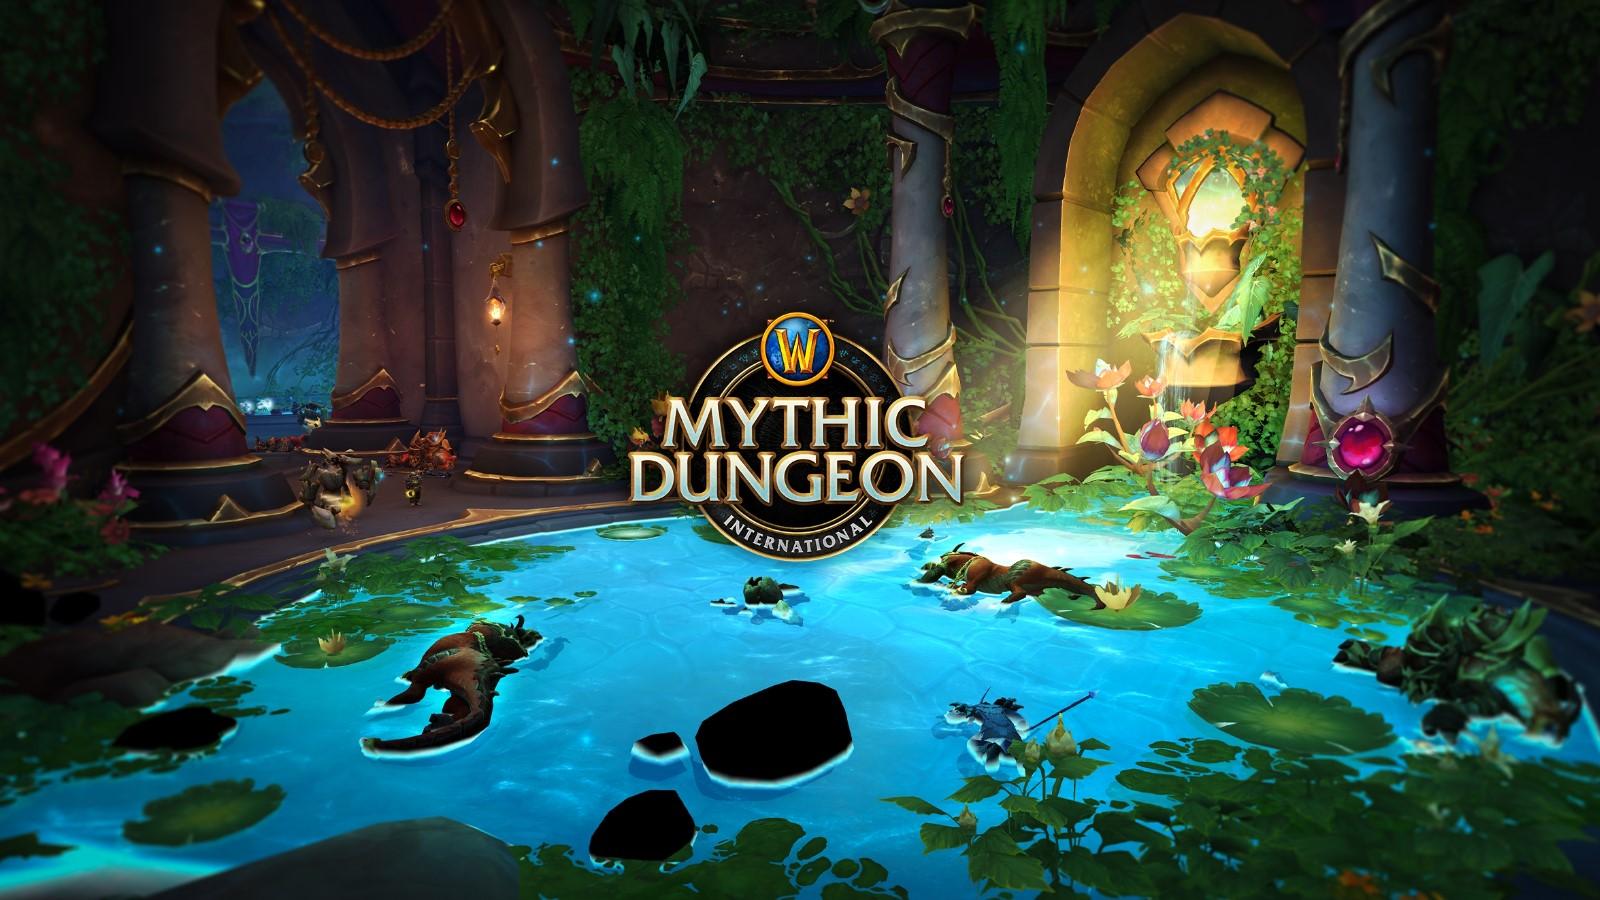 The Mythic Dungeon international logo